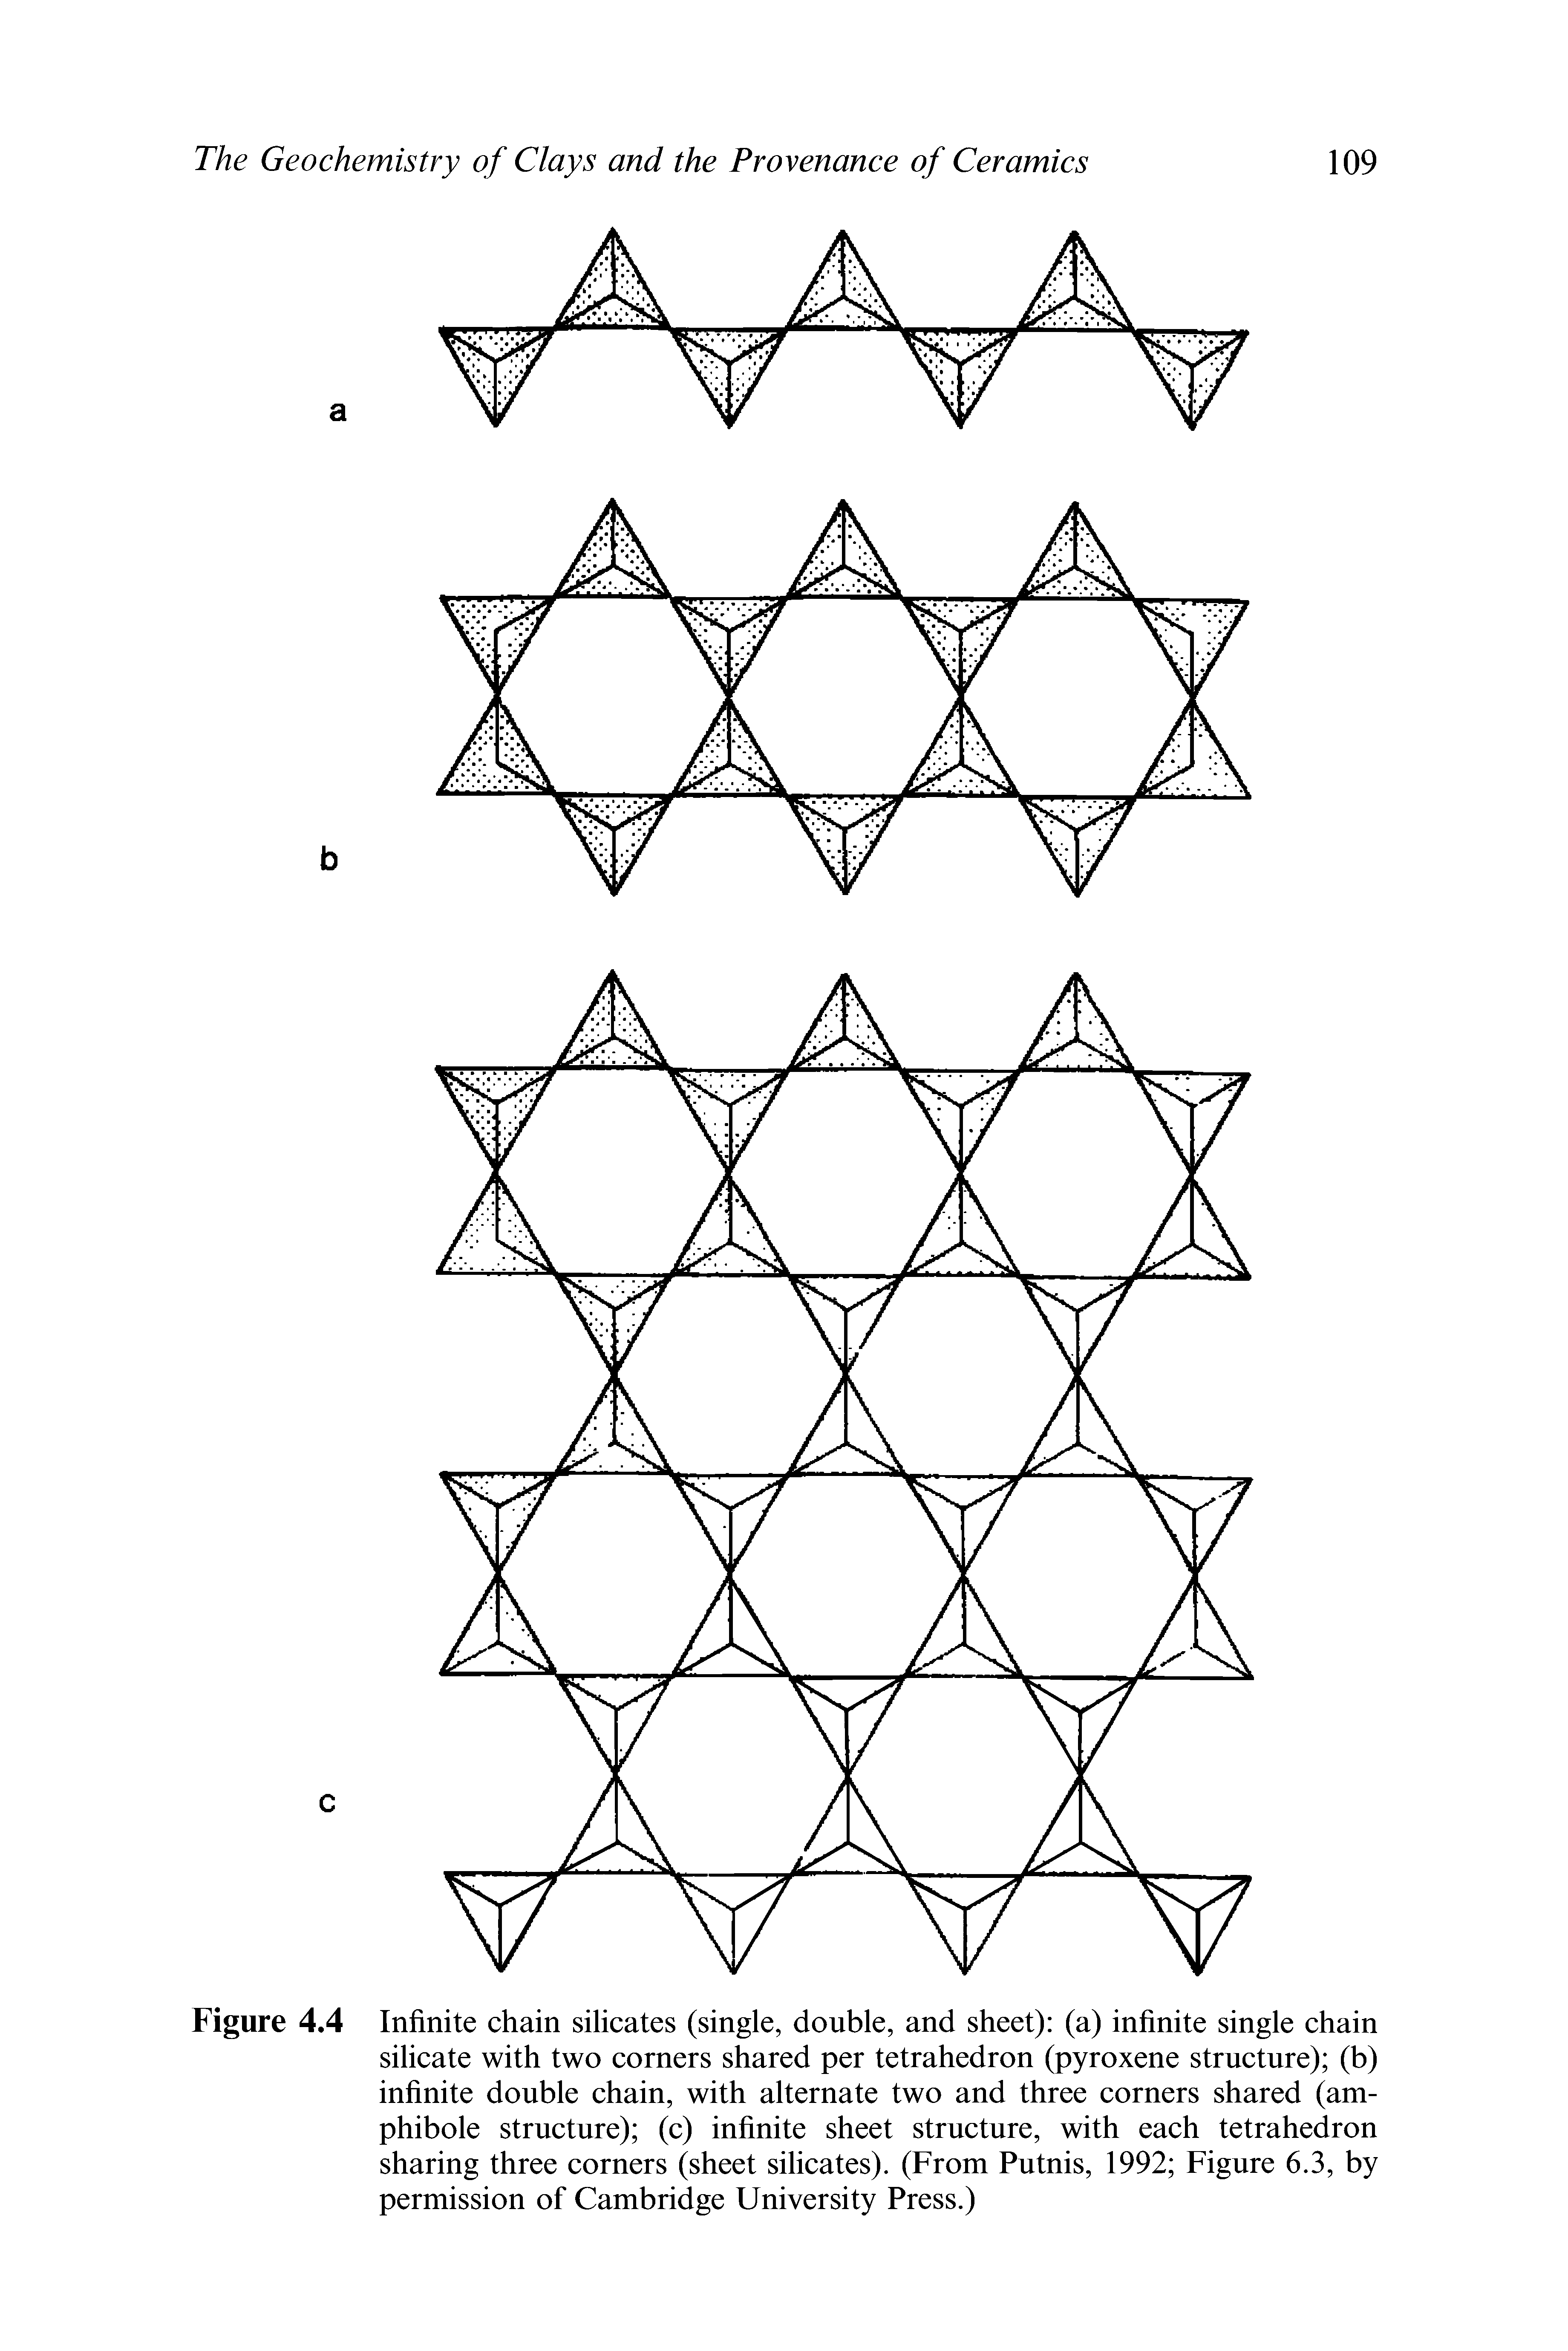 Figure 4.4 Infinite chain silicates (single, double, and sheet) (a) infinite single chain silicate with two corners shared per tetrahedron (pyroxene structure) (b) infinite double chain, with alternate two and three corners shared (am-phibole structure) (c) infinite sheet structure, with each tetrahedron sharing three corners (sheet silicates). (From Putnis, 1992 Figure 6.3, by permission of Cambridge University Press.)...